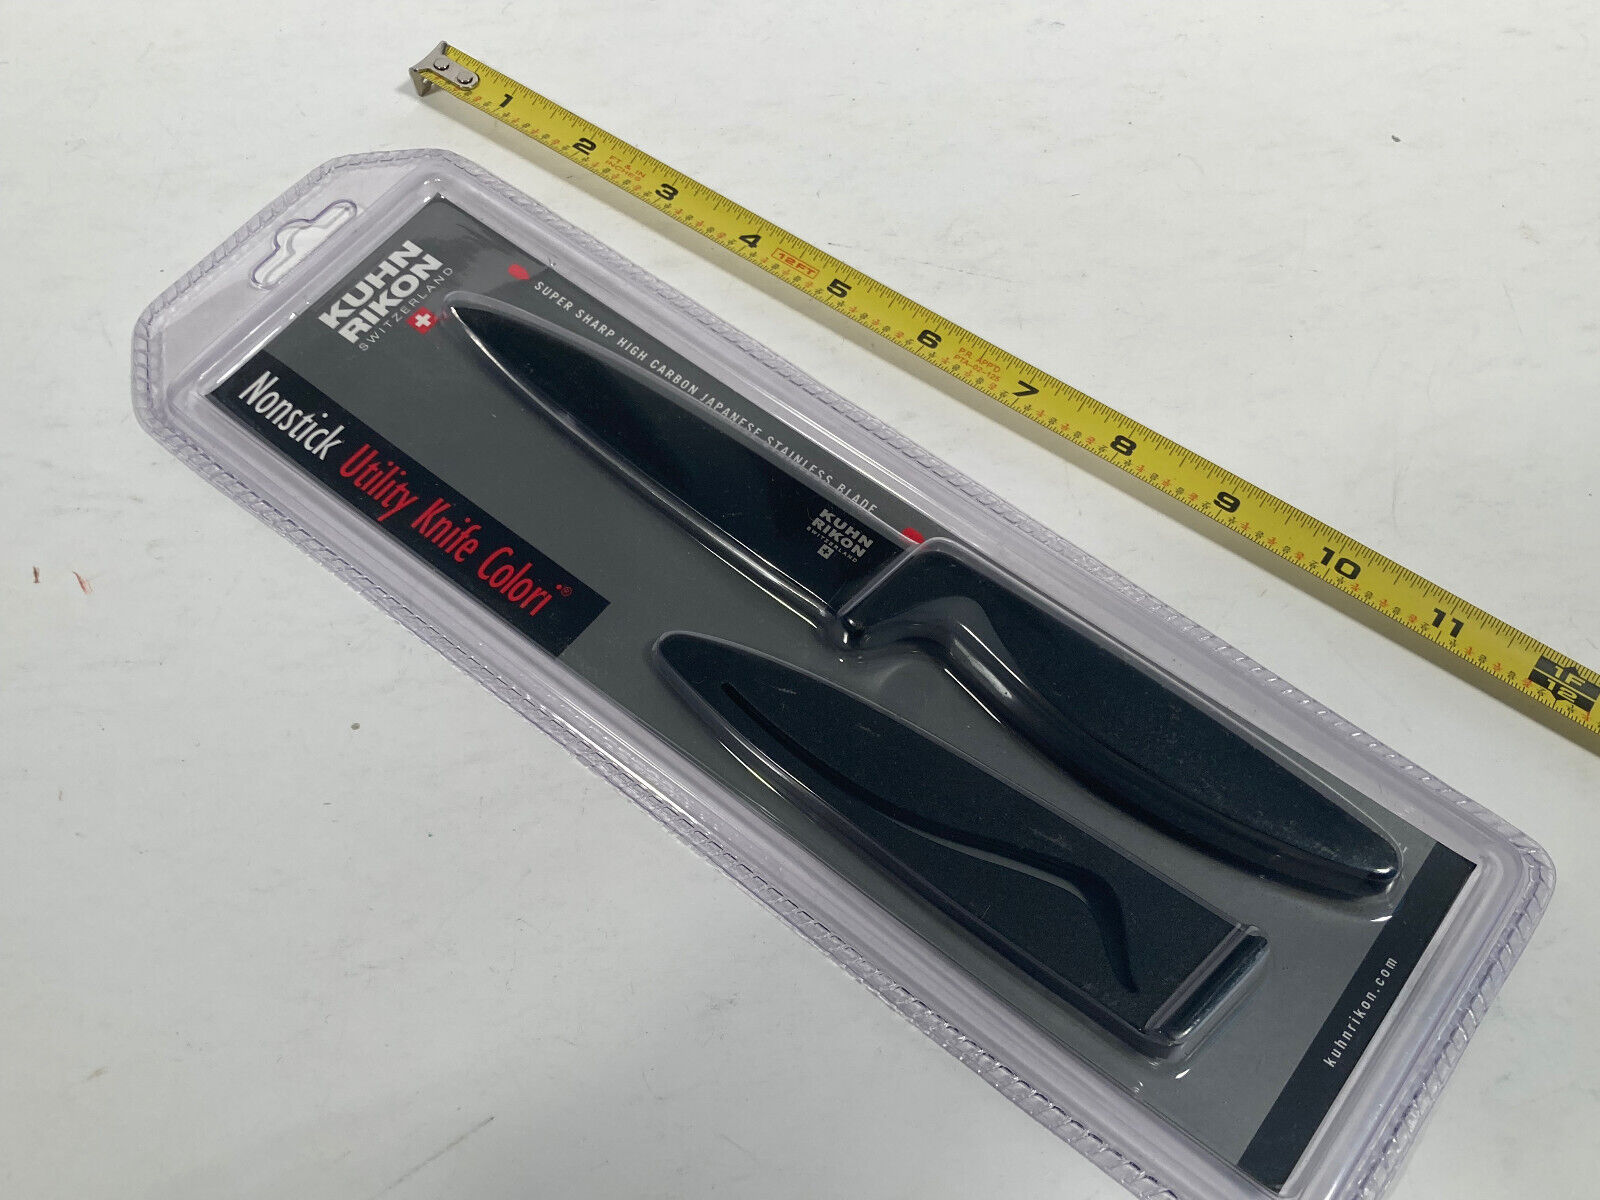 VTG Kuhn Rikon Switzerland Swiss Utility Knife Nonstick High Carbon NEW IN BOX